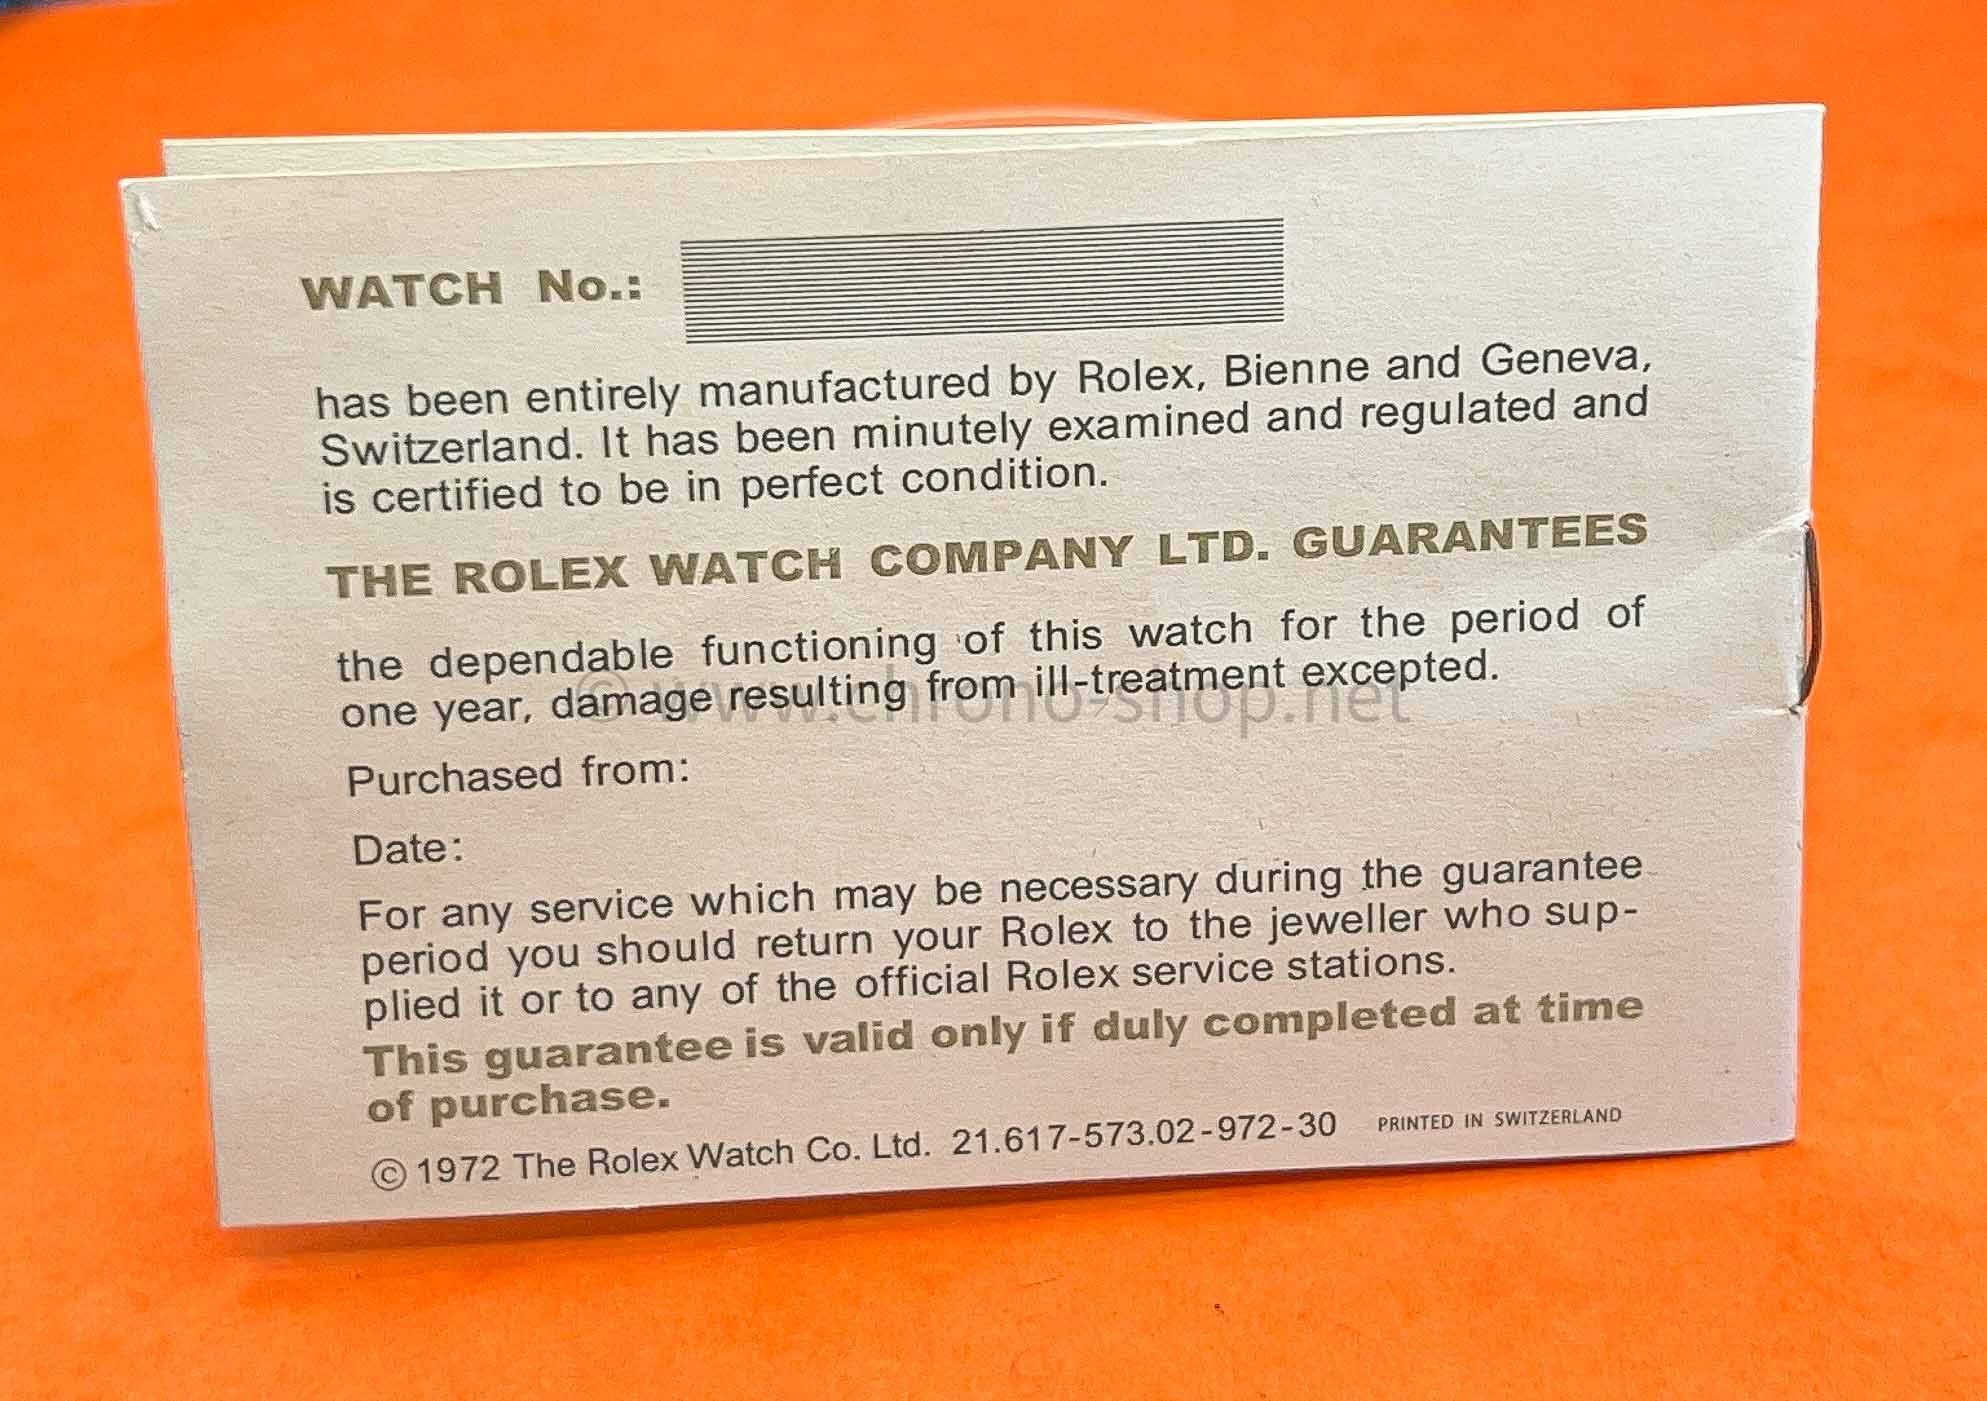 Rolex Blank 1972 Warranty Paper guarantee booklet ref 21.617-573.02-972-30 Submariner 1680,5513,5512 Daytona 6263,6262,6239